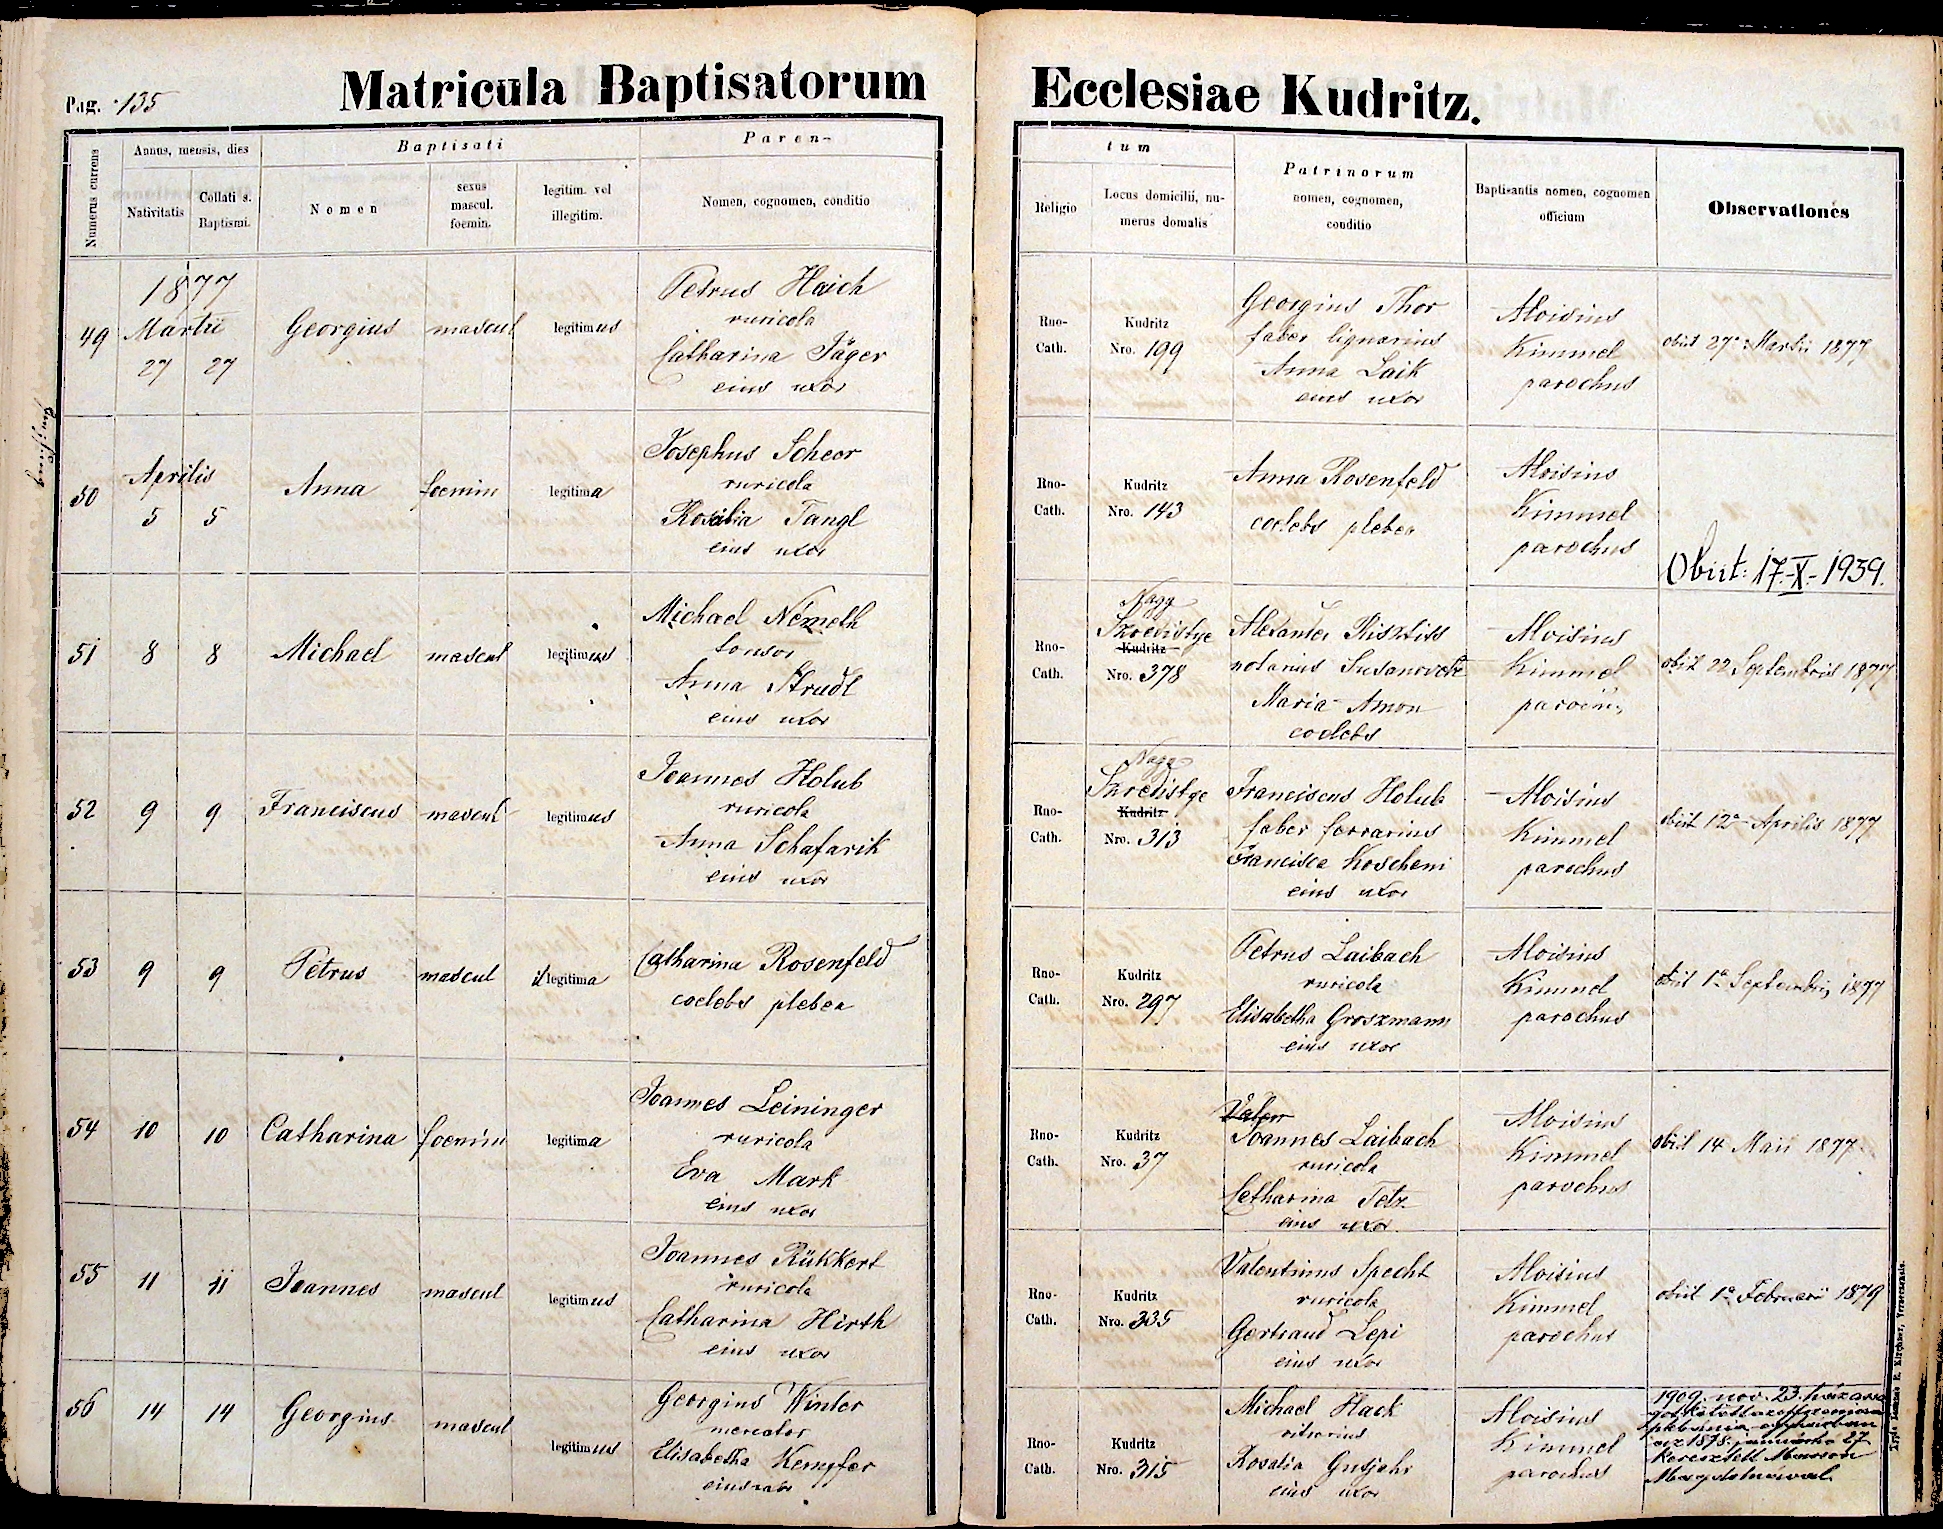 images/church_records/BIRTHS/1870-1879B/1877/135